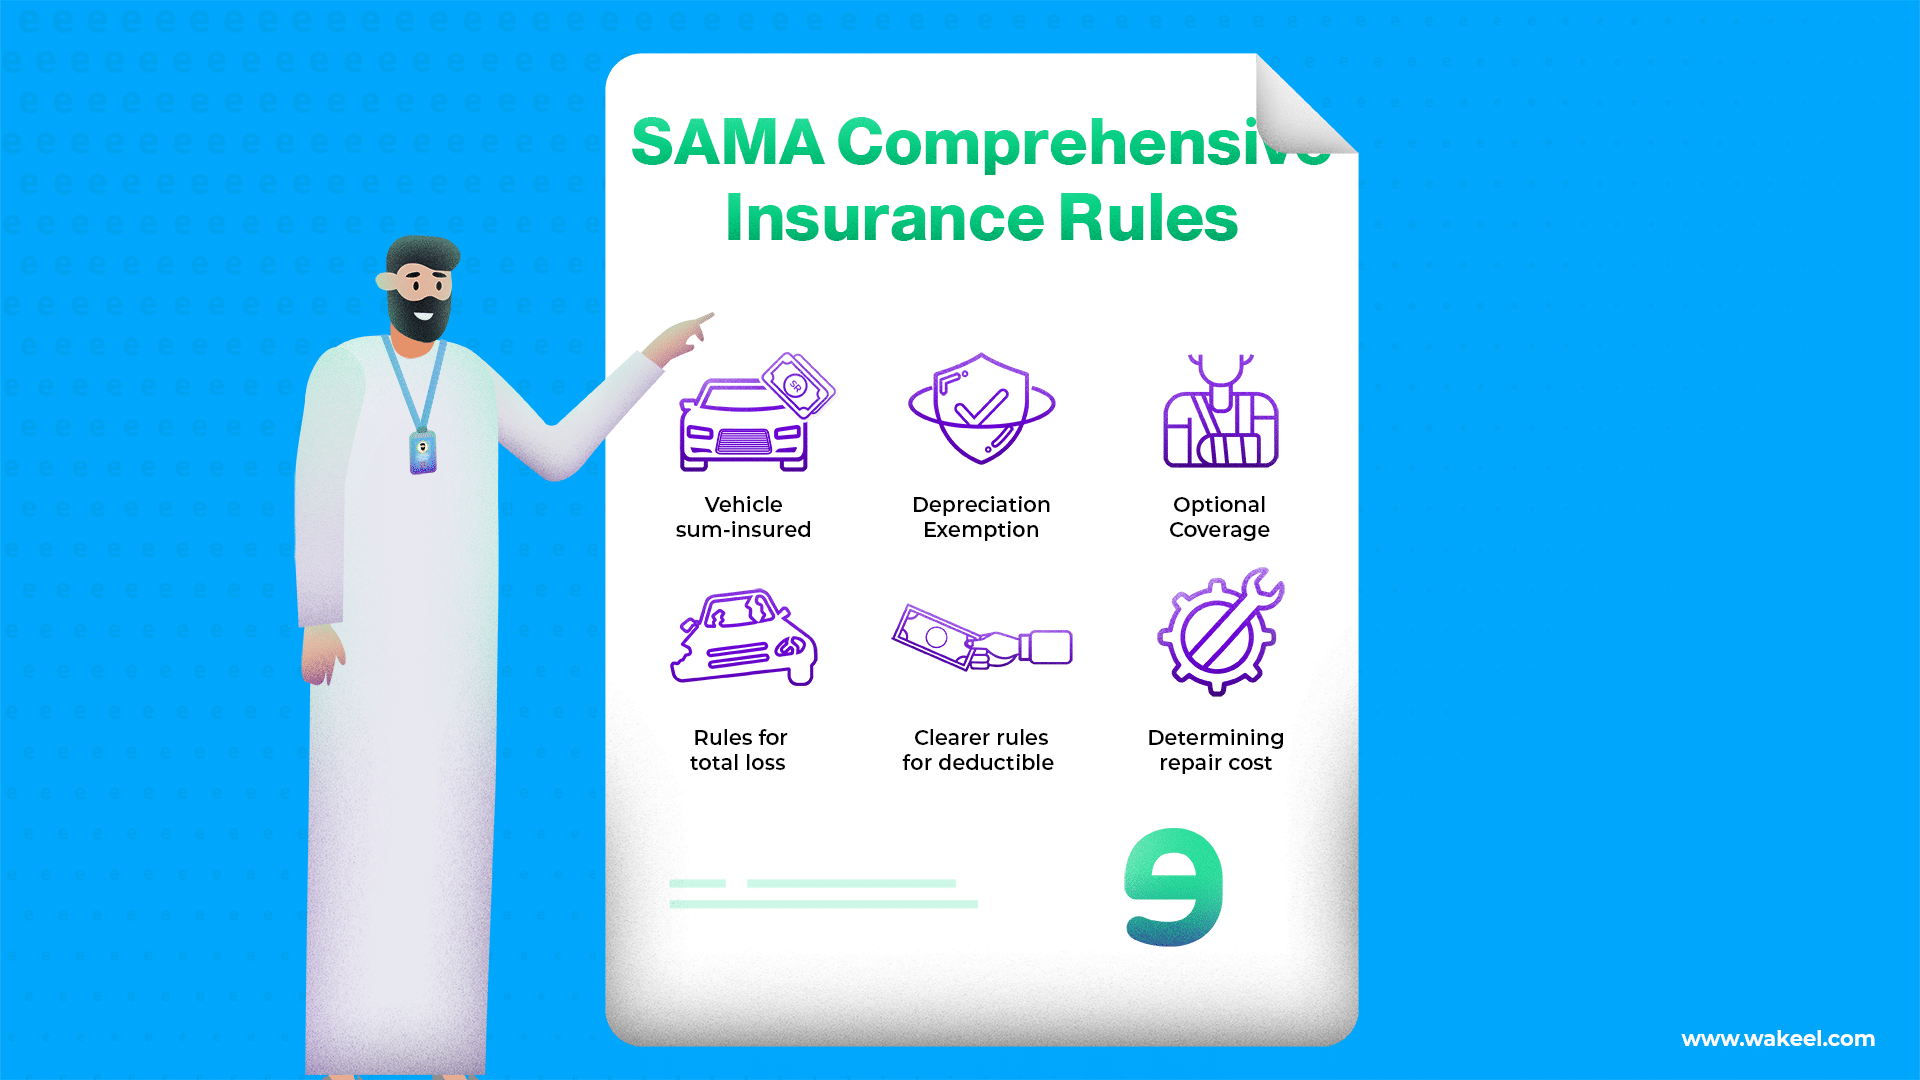 SAMA Comprehensive Insurance Rules